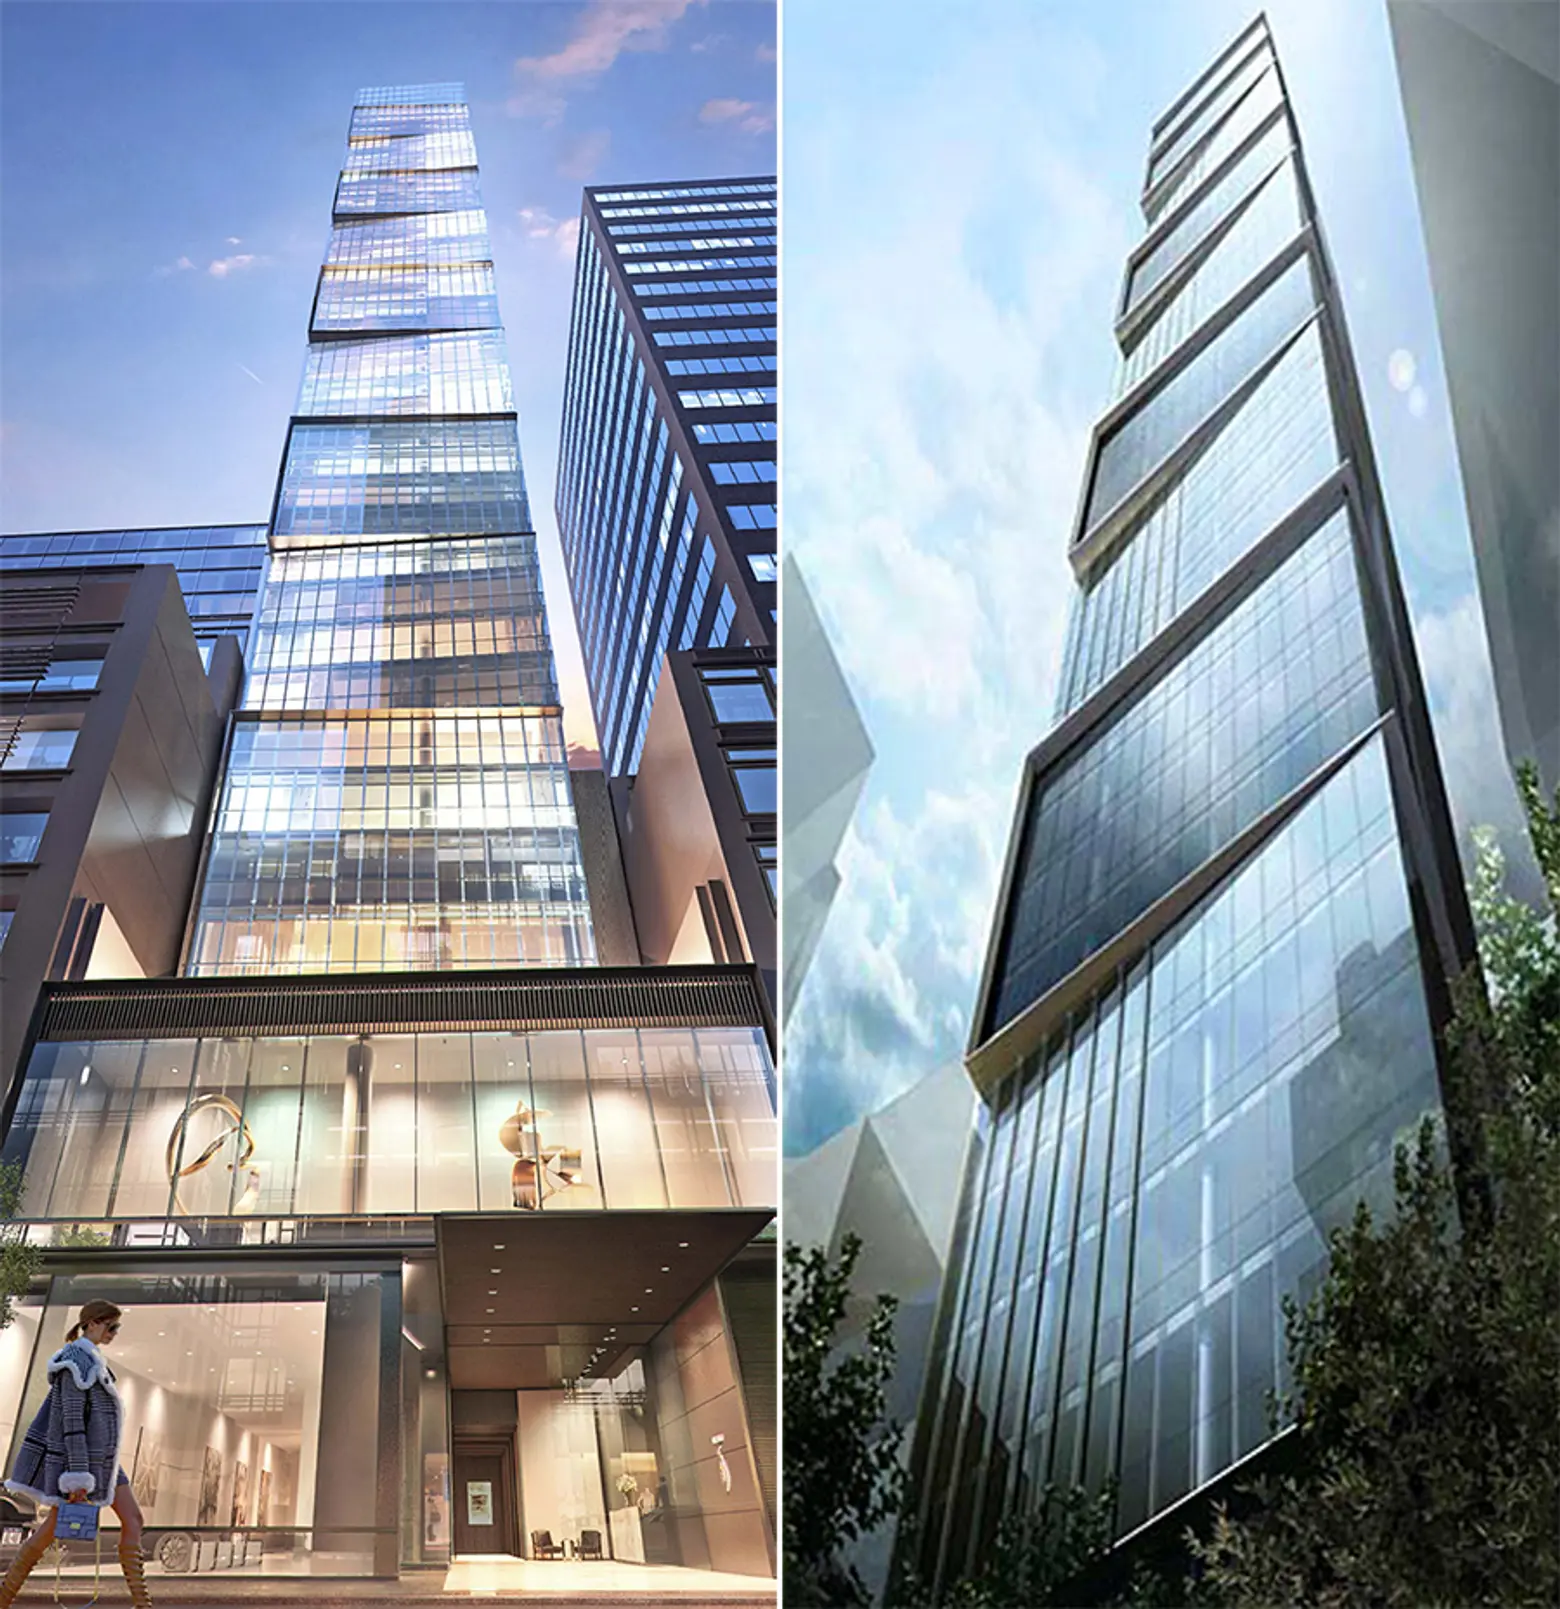 118 East 59th, Euro Properties, Rudd Family, Billionaires Row, NYC Construction, nyc condos, manhattan, luxury real estate, New York skyscrapers